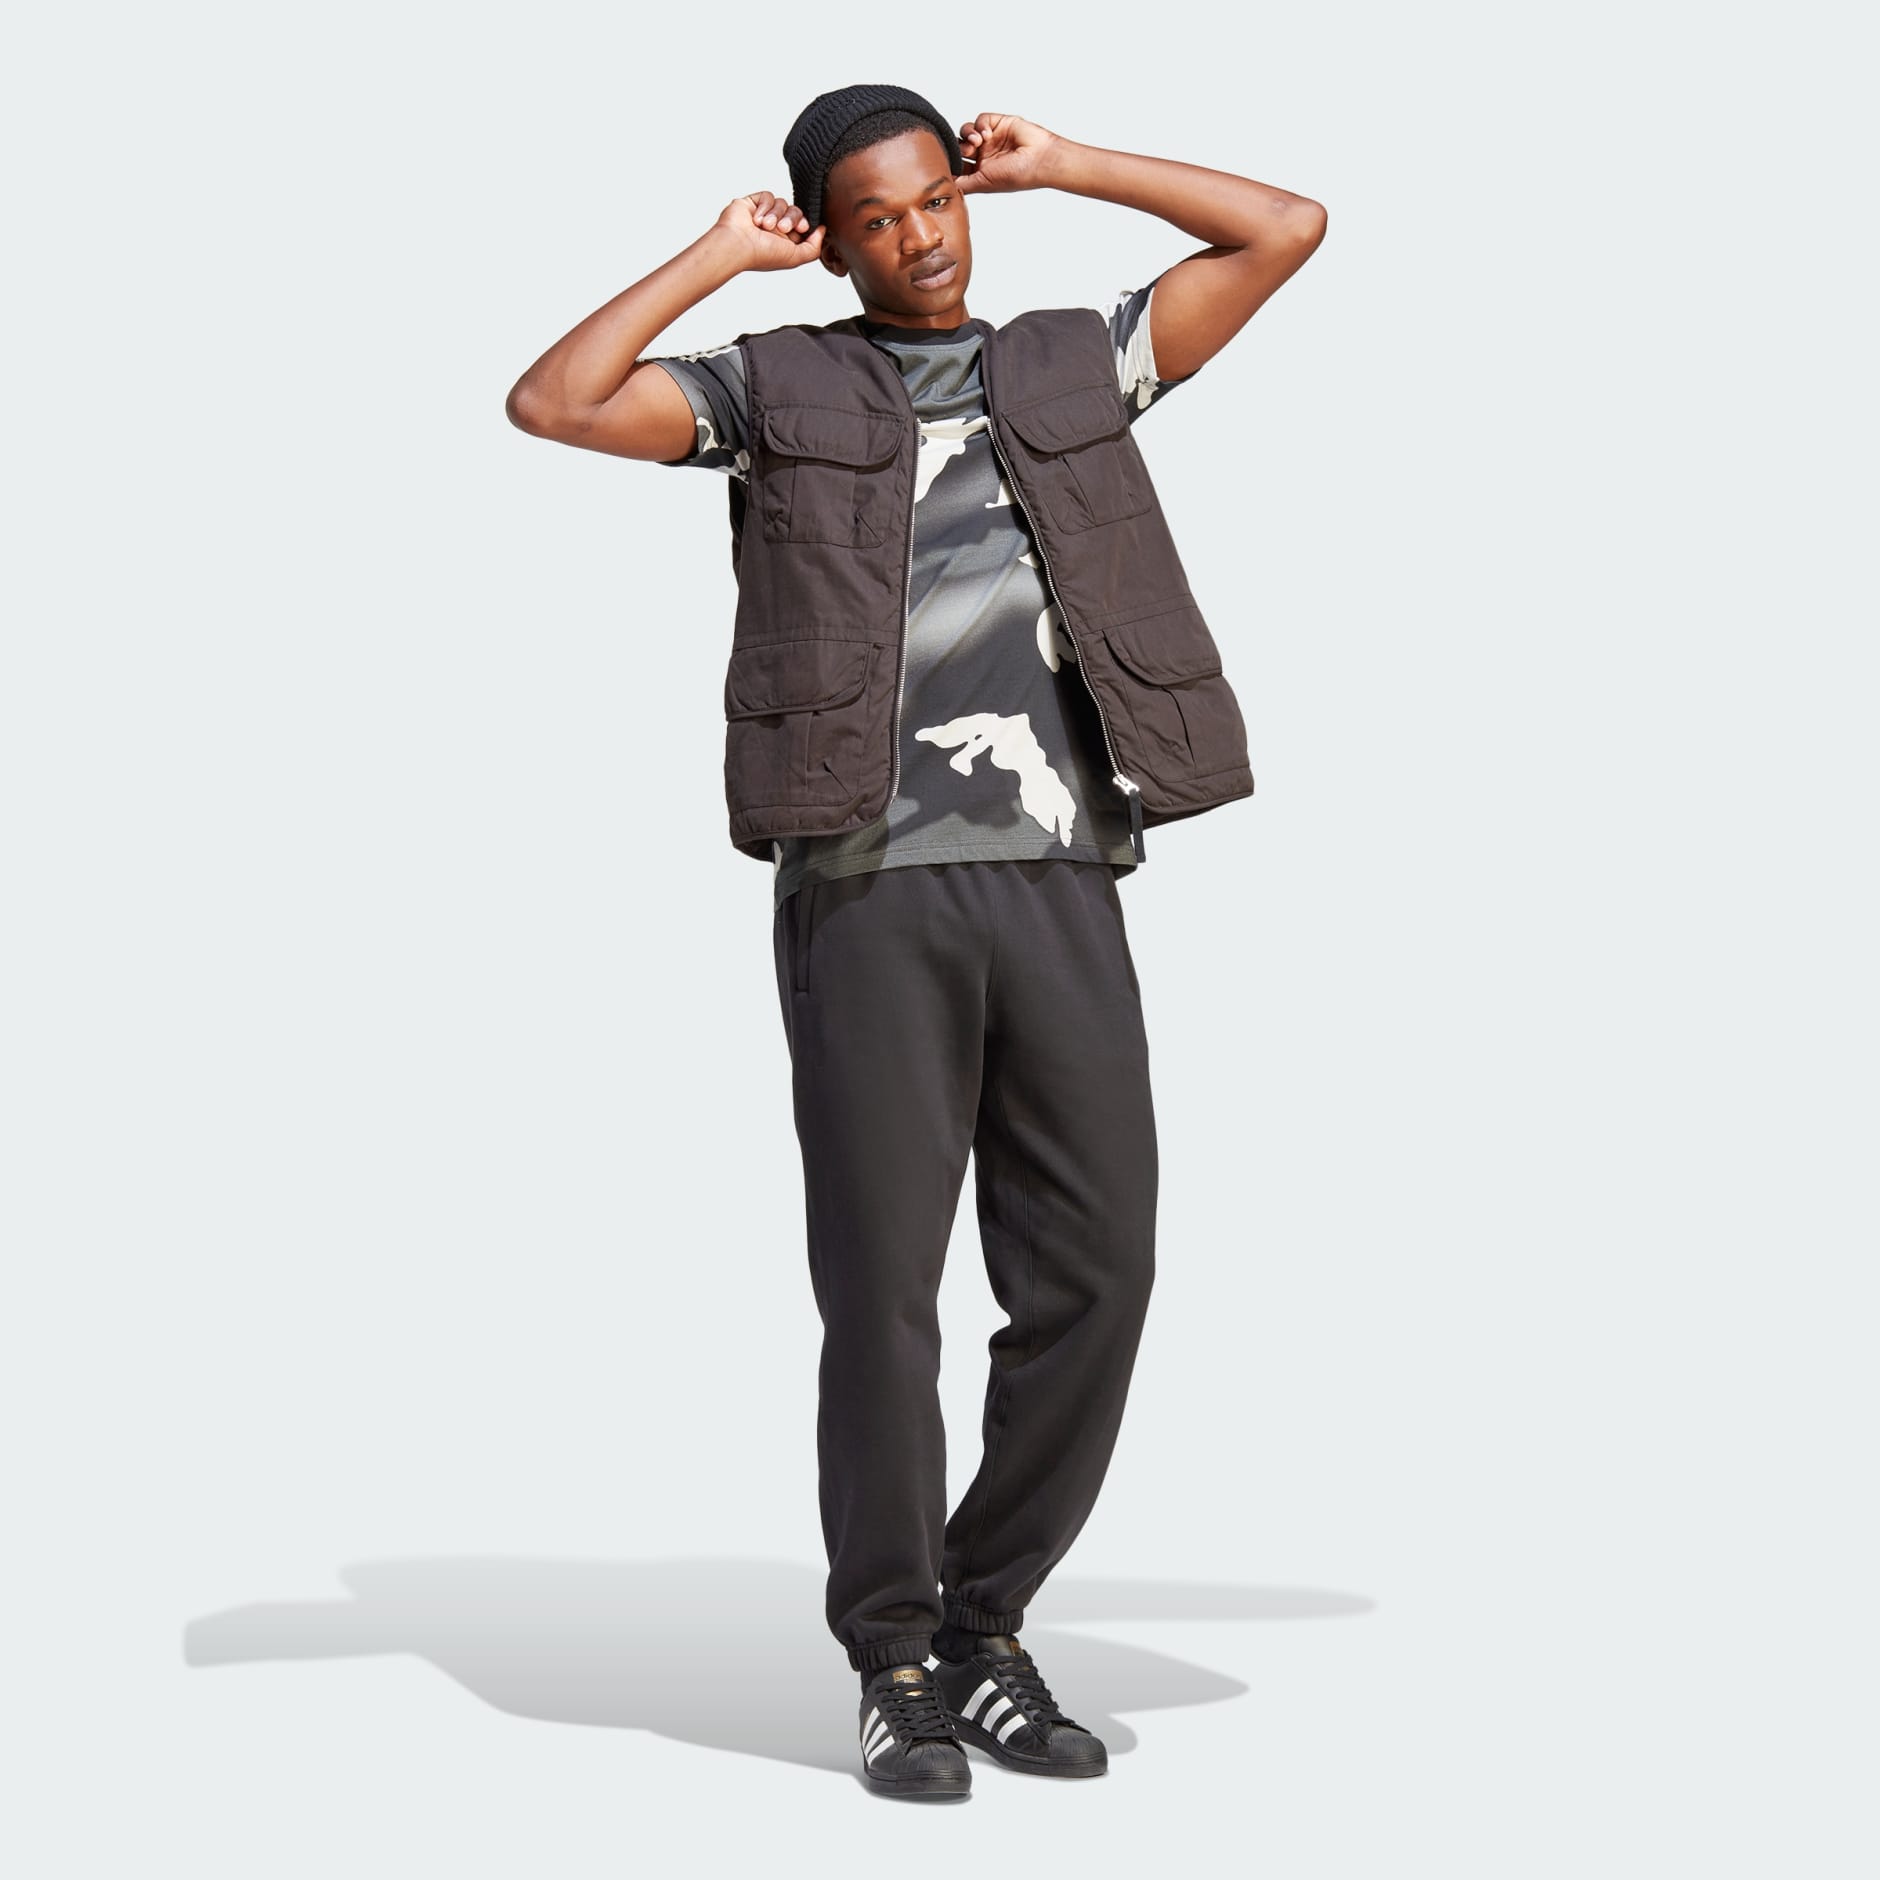 Men's Clothing - Graphics Camo Allover Print Tee - Black | adidas Saudi  Arabia